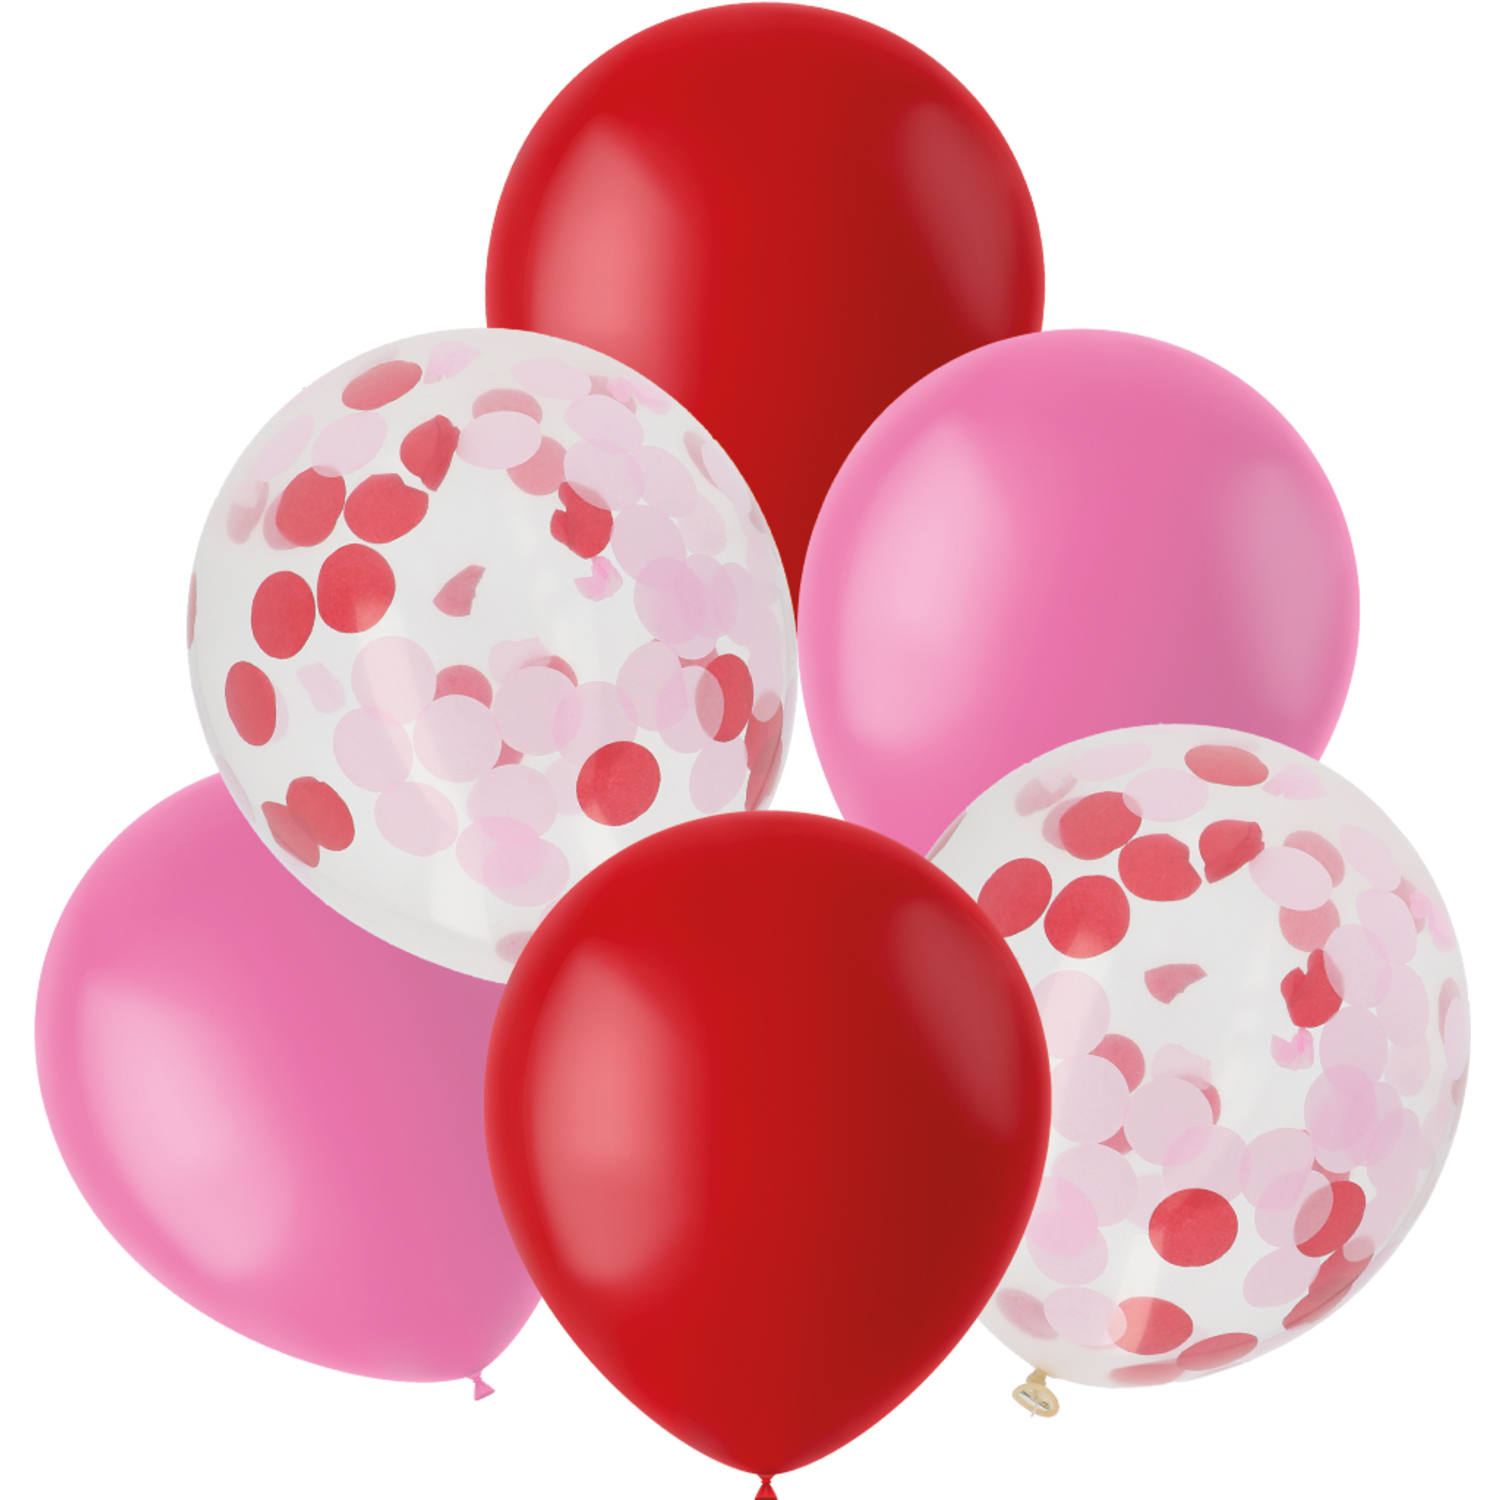 Ballons Mix Rot & Rosa 30cm - 6 Stück von Folat B.V.